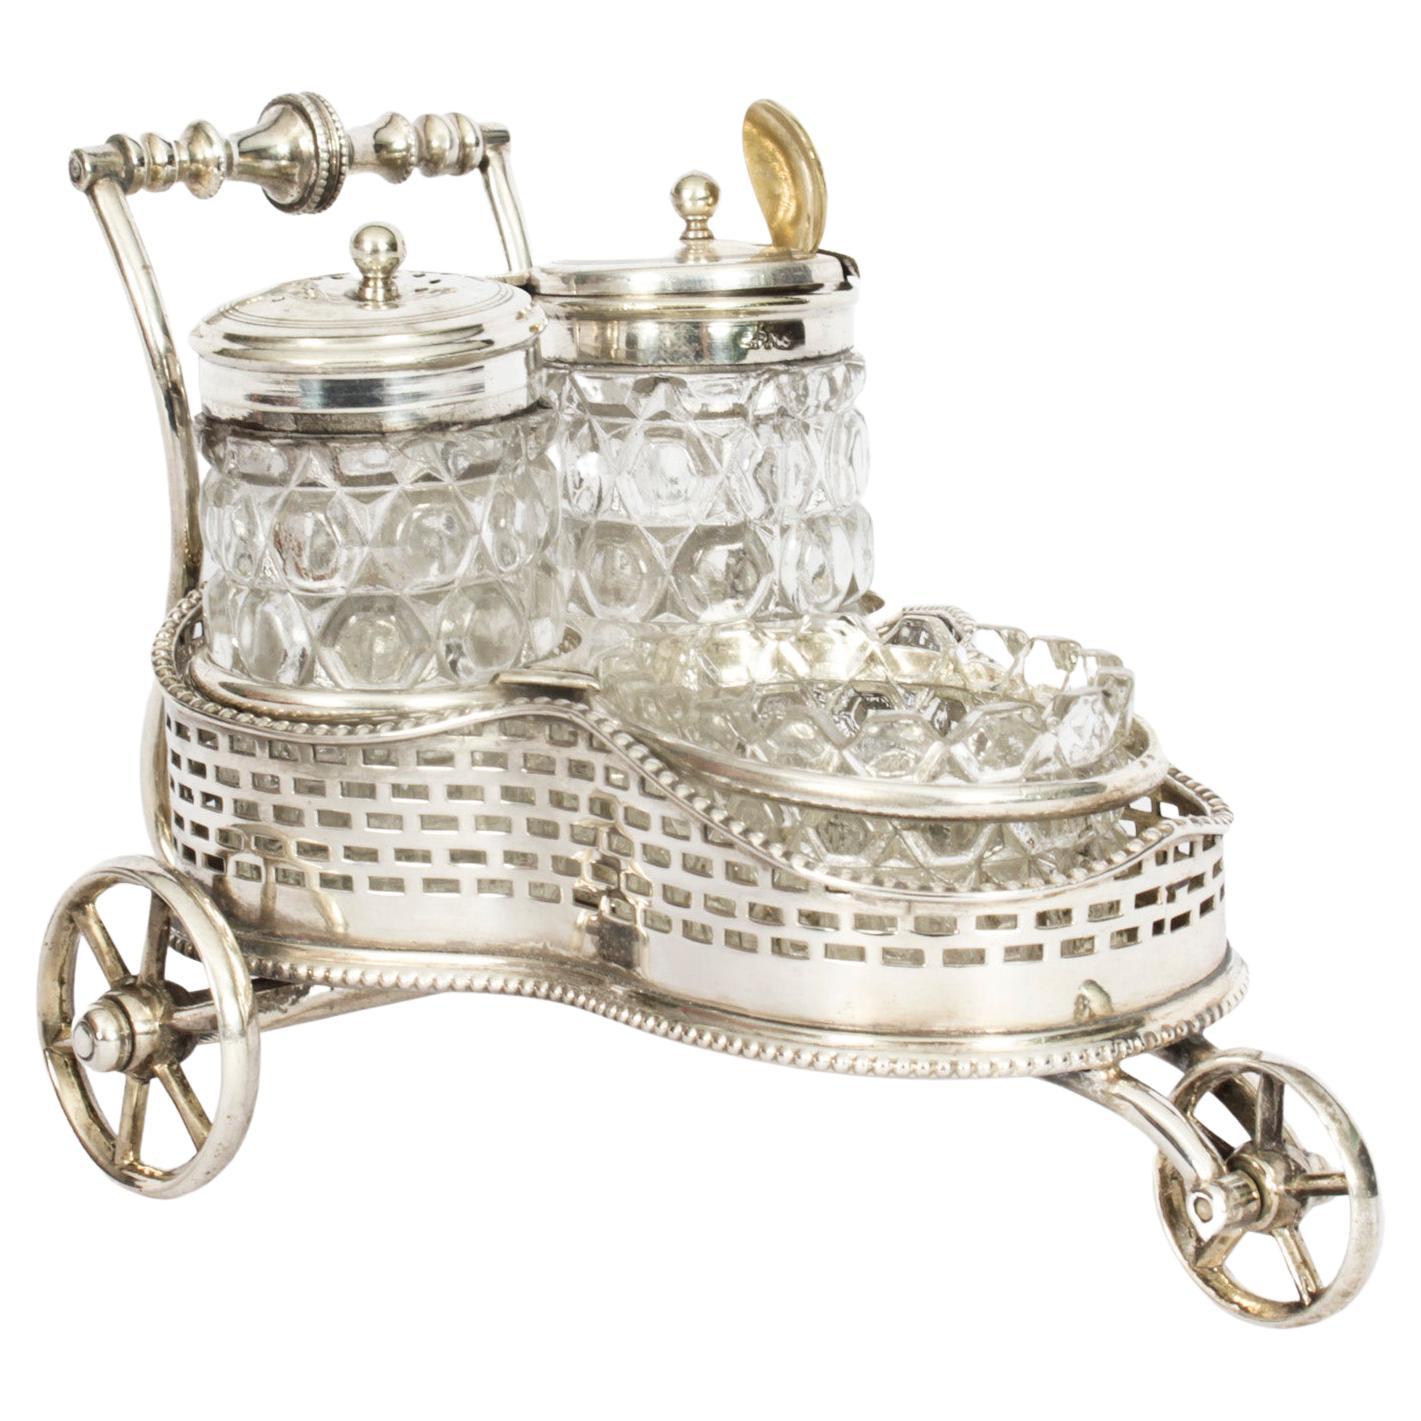 Antique Victorian Silver Plated Motoring Cruet Set 19th C